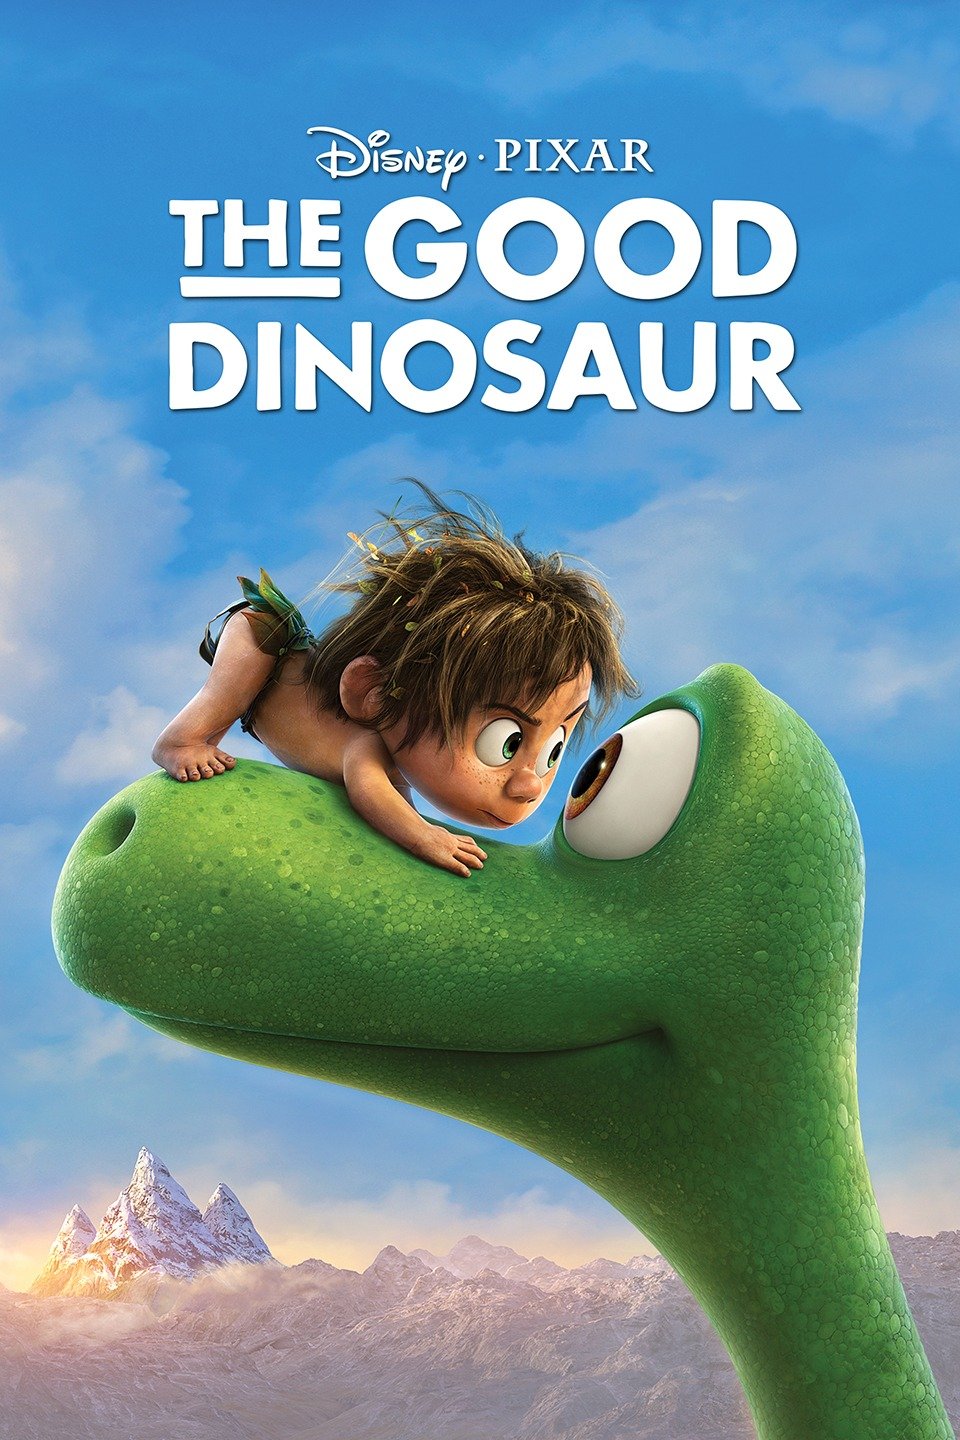 [MINI Super-HQ] The Good Dinosaur (2015) ผจญภัยไดโนเสาร์เพื่อนรัก [1080p] [พากย์ไทย 5.1 + อังกฤษ DTS] [บรรยายไทย + อังกฤษ] [เสียงไทย + ซับไทย] [ONE2UP]